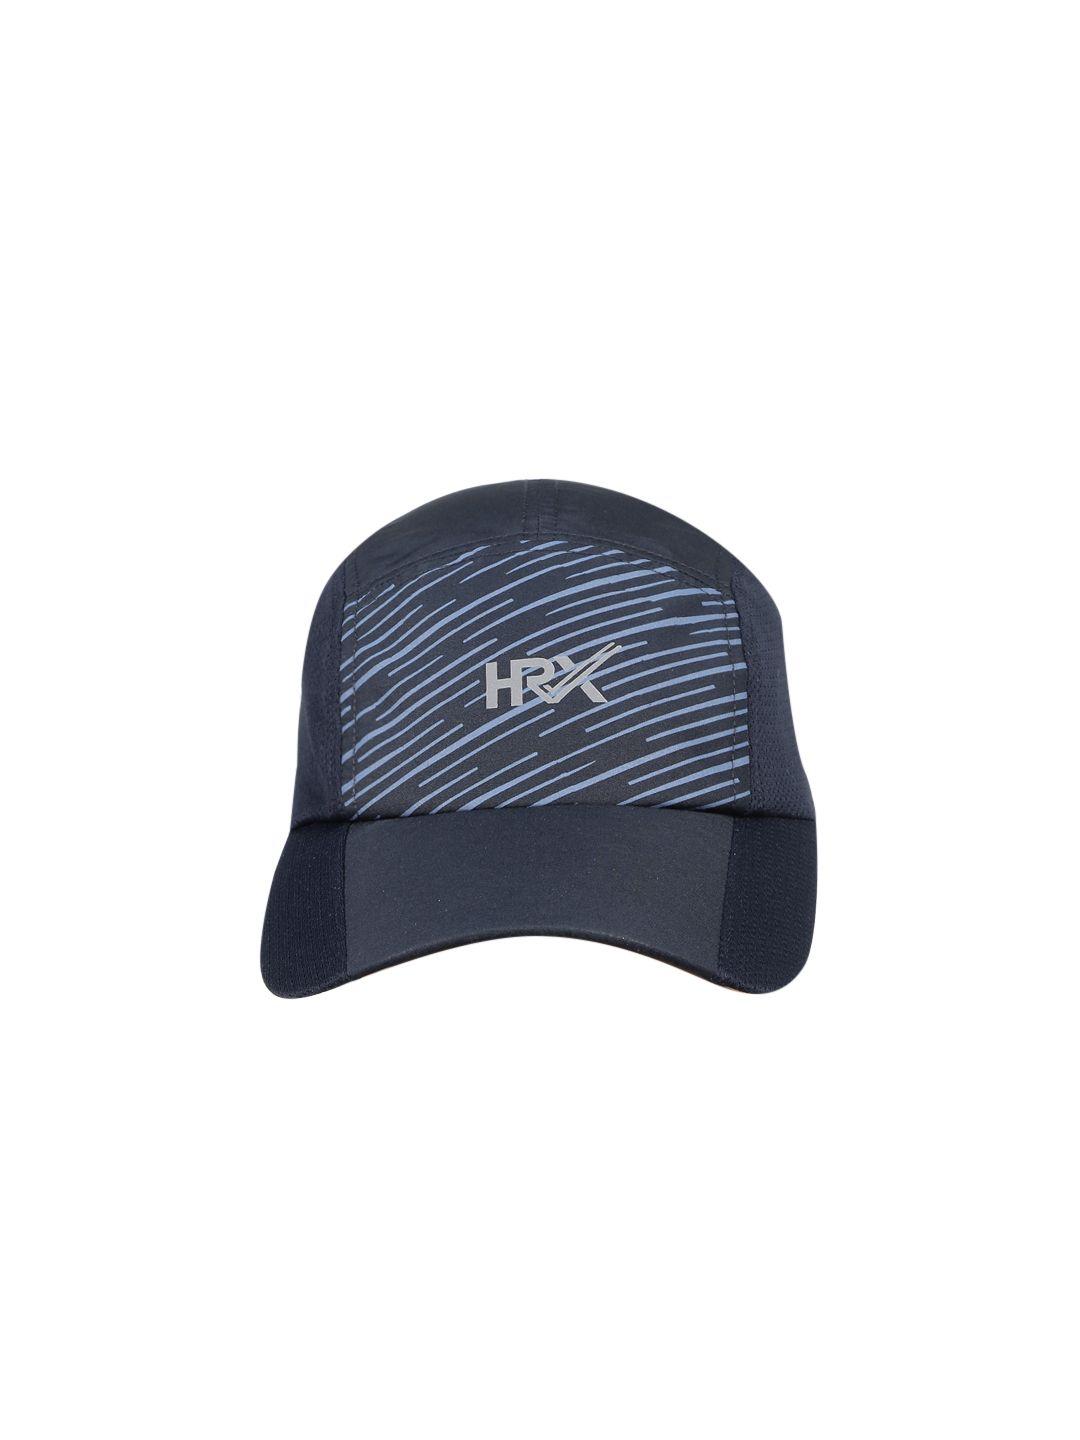 hrx by hrithik roshan men navy blue printed running dryfit cap